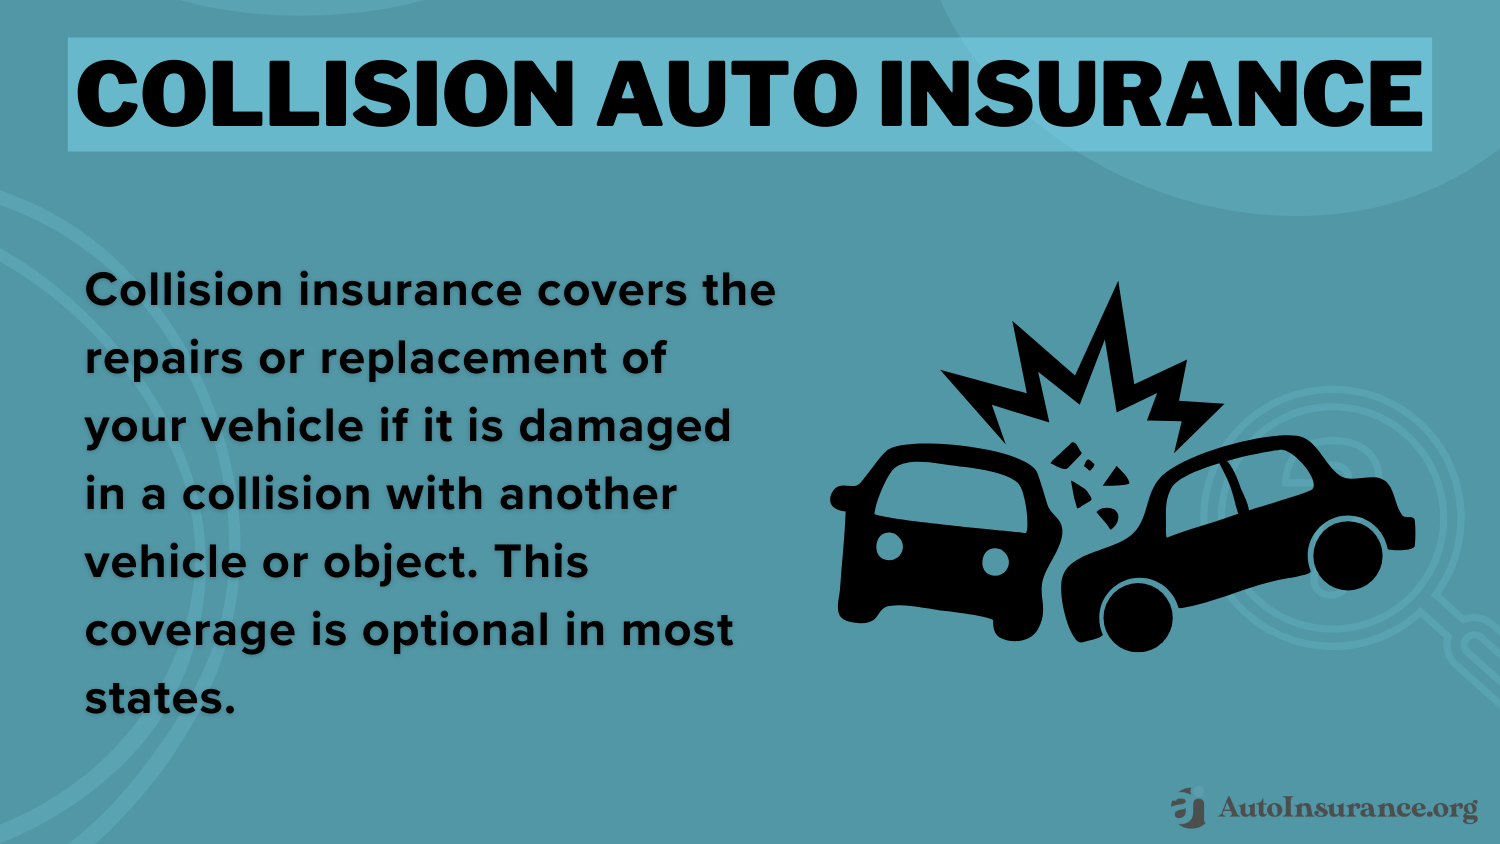 Collision Auto Insurance Definition Card